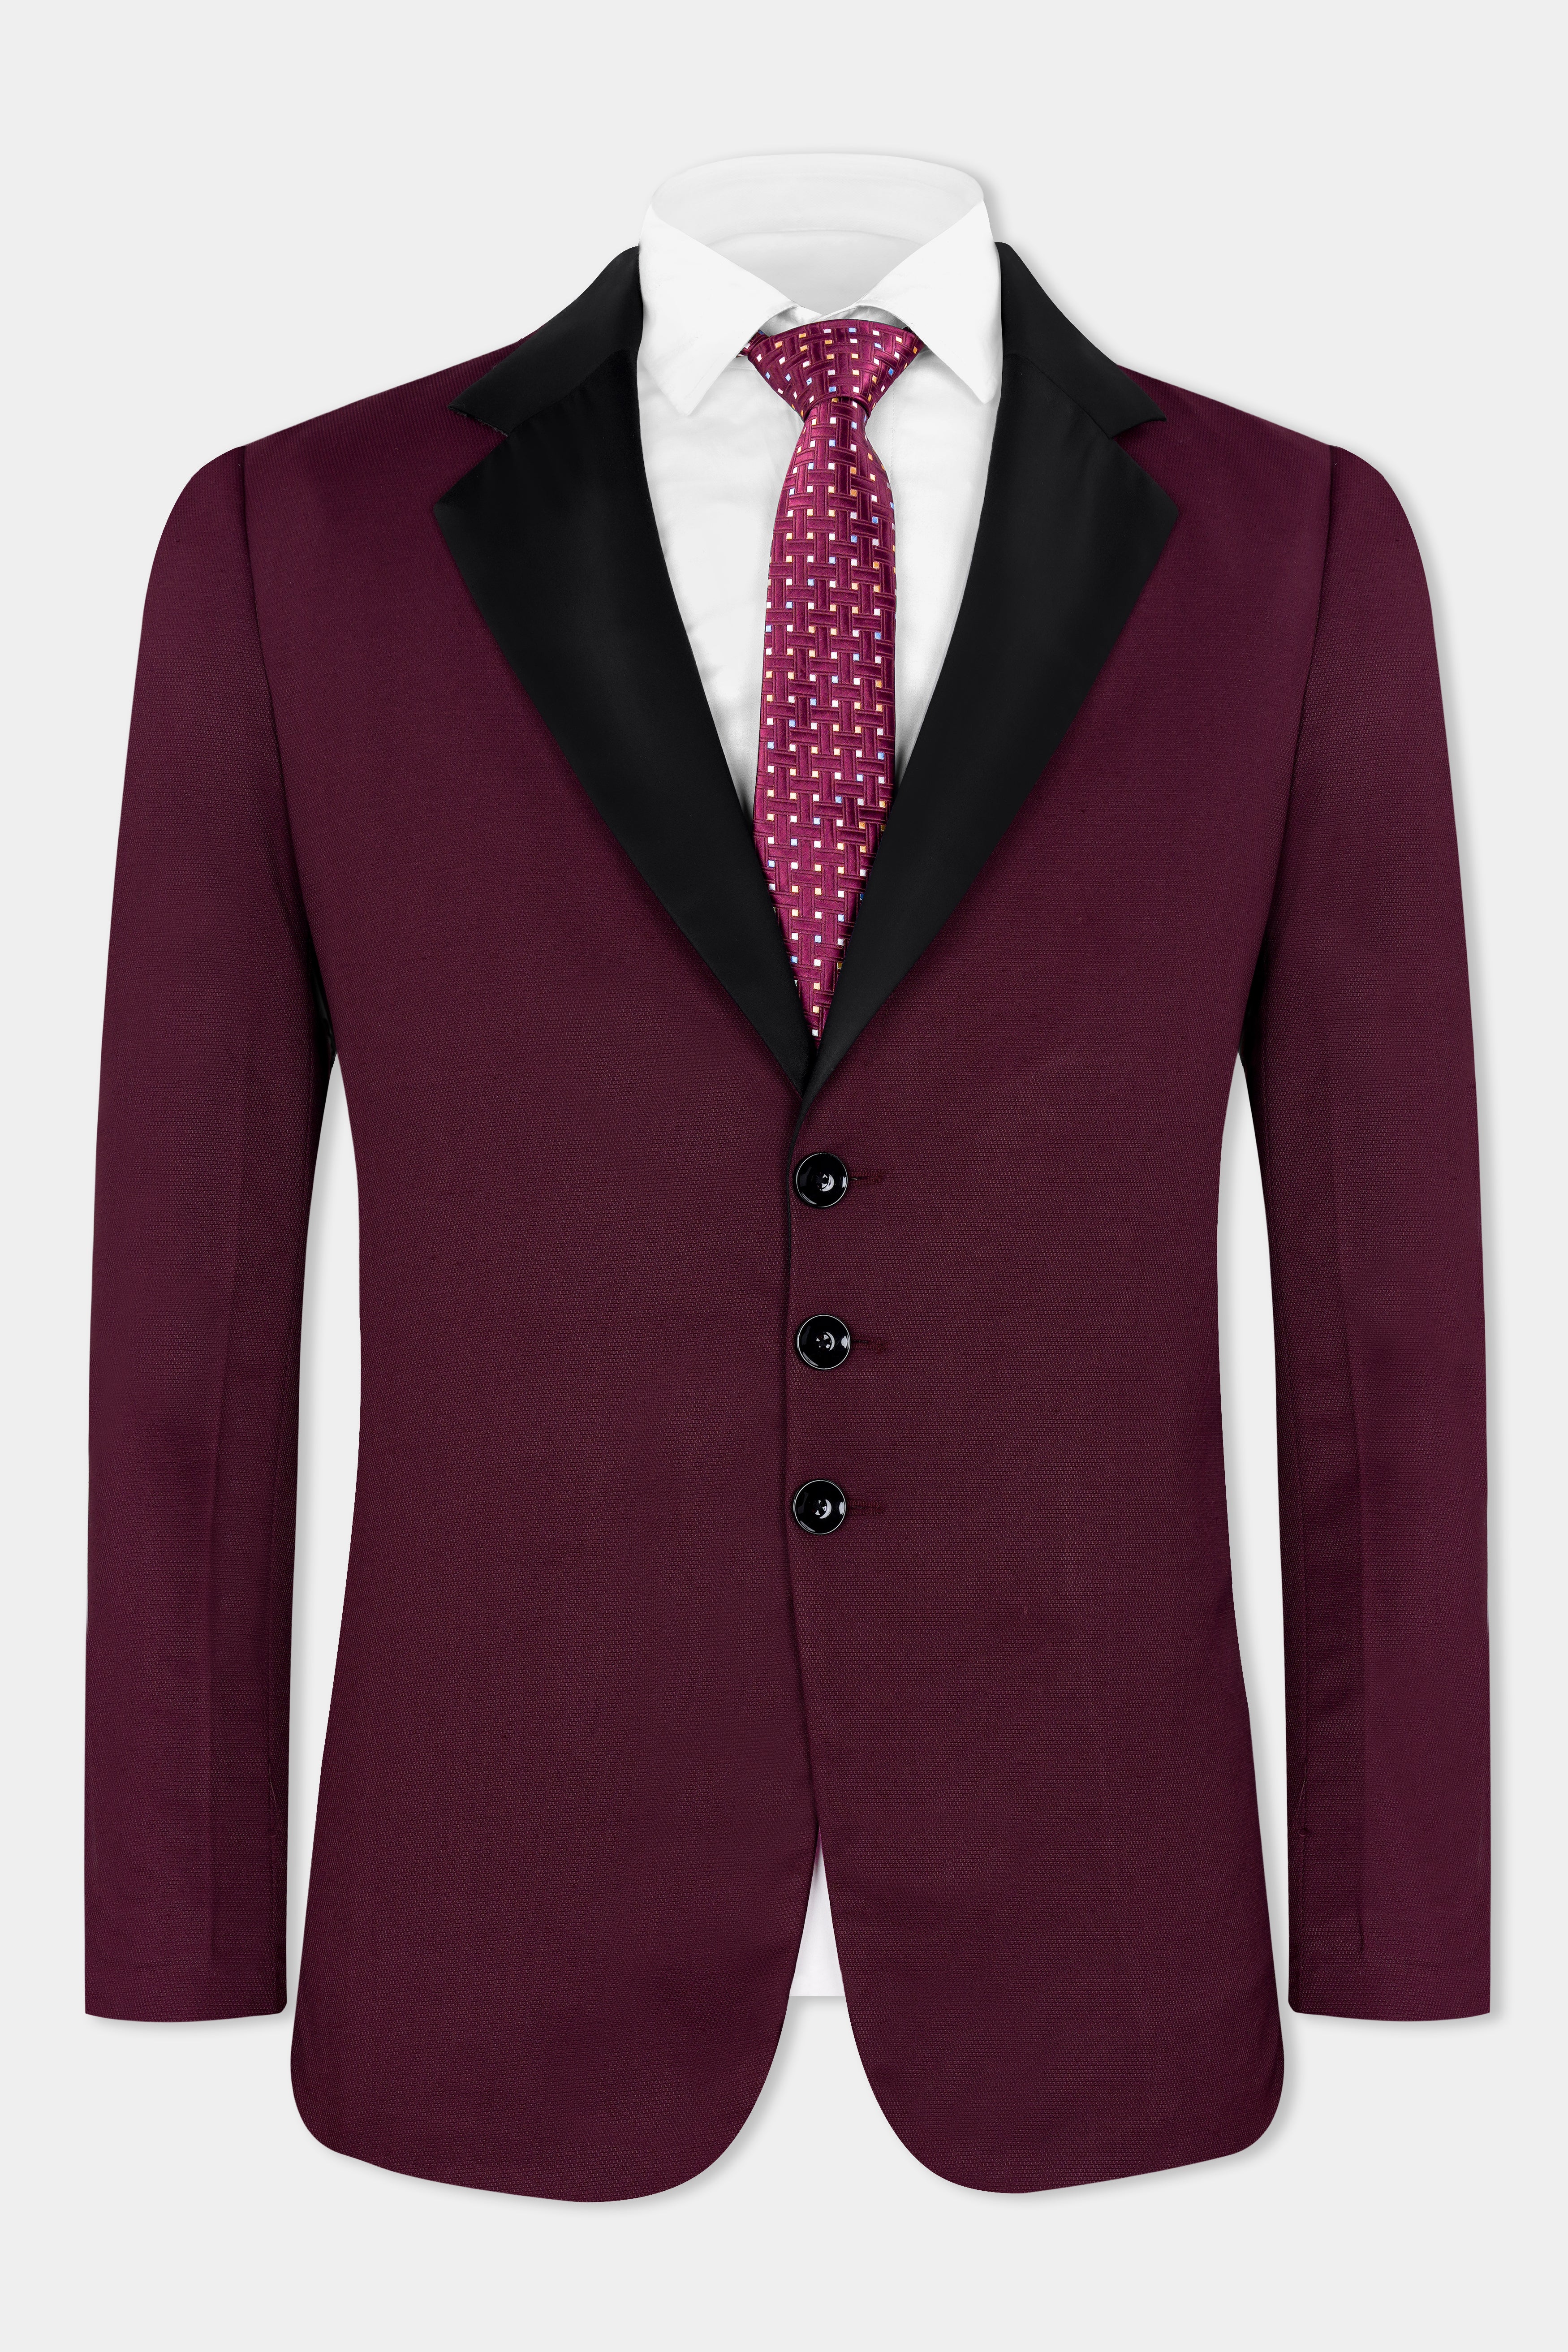 ASOS DESIGN skinny tuxedo suit jacket in burgundy | ASOS